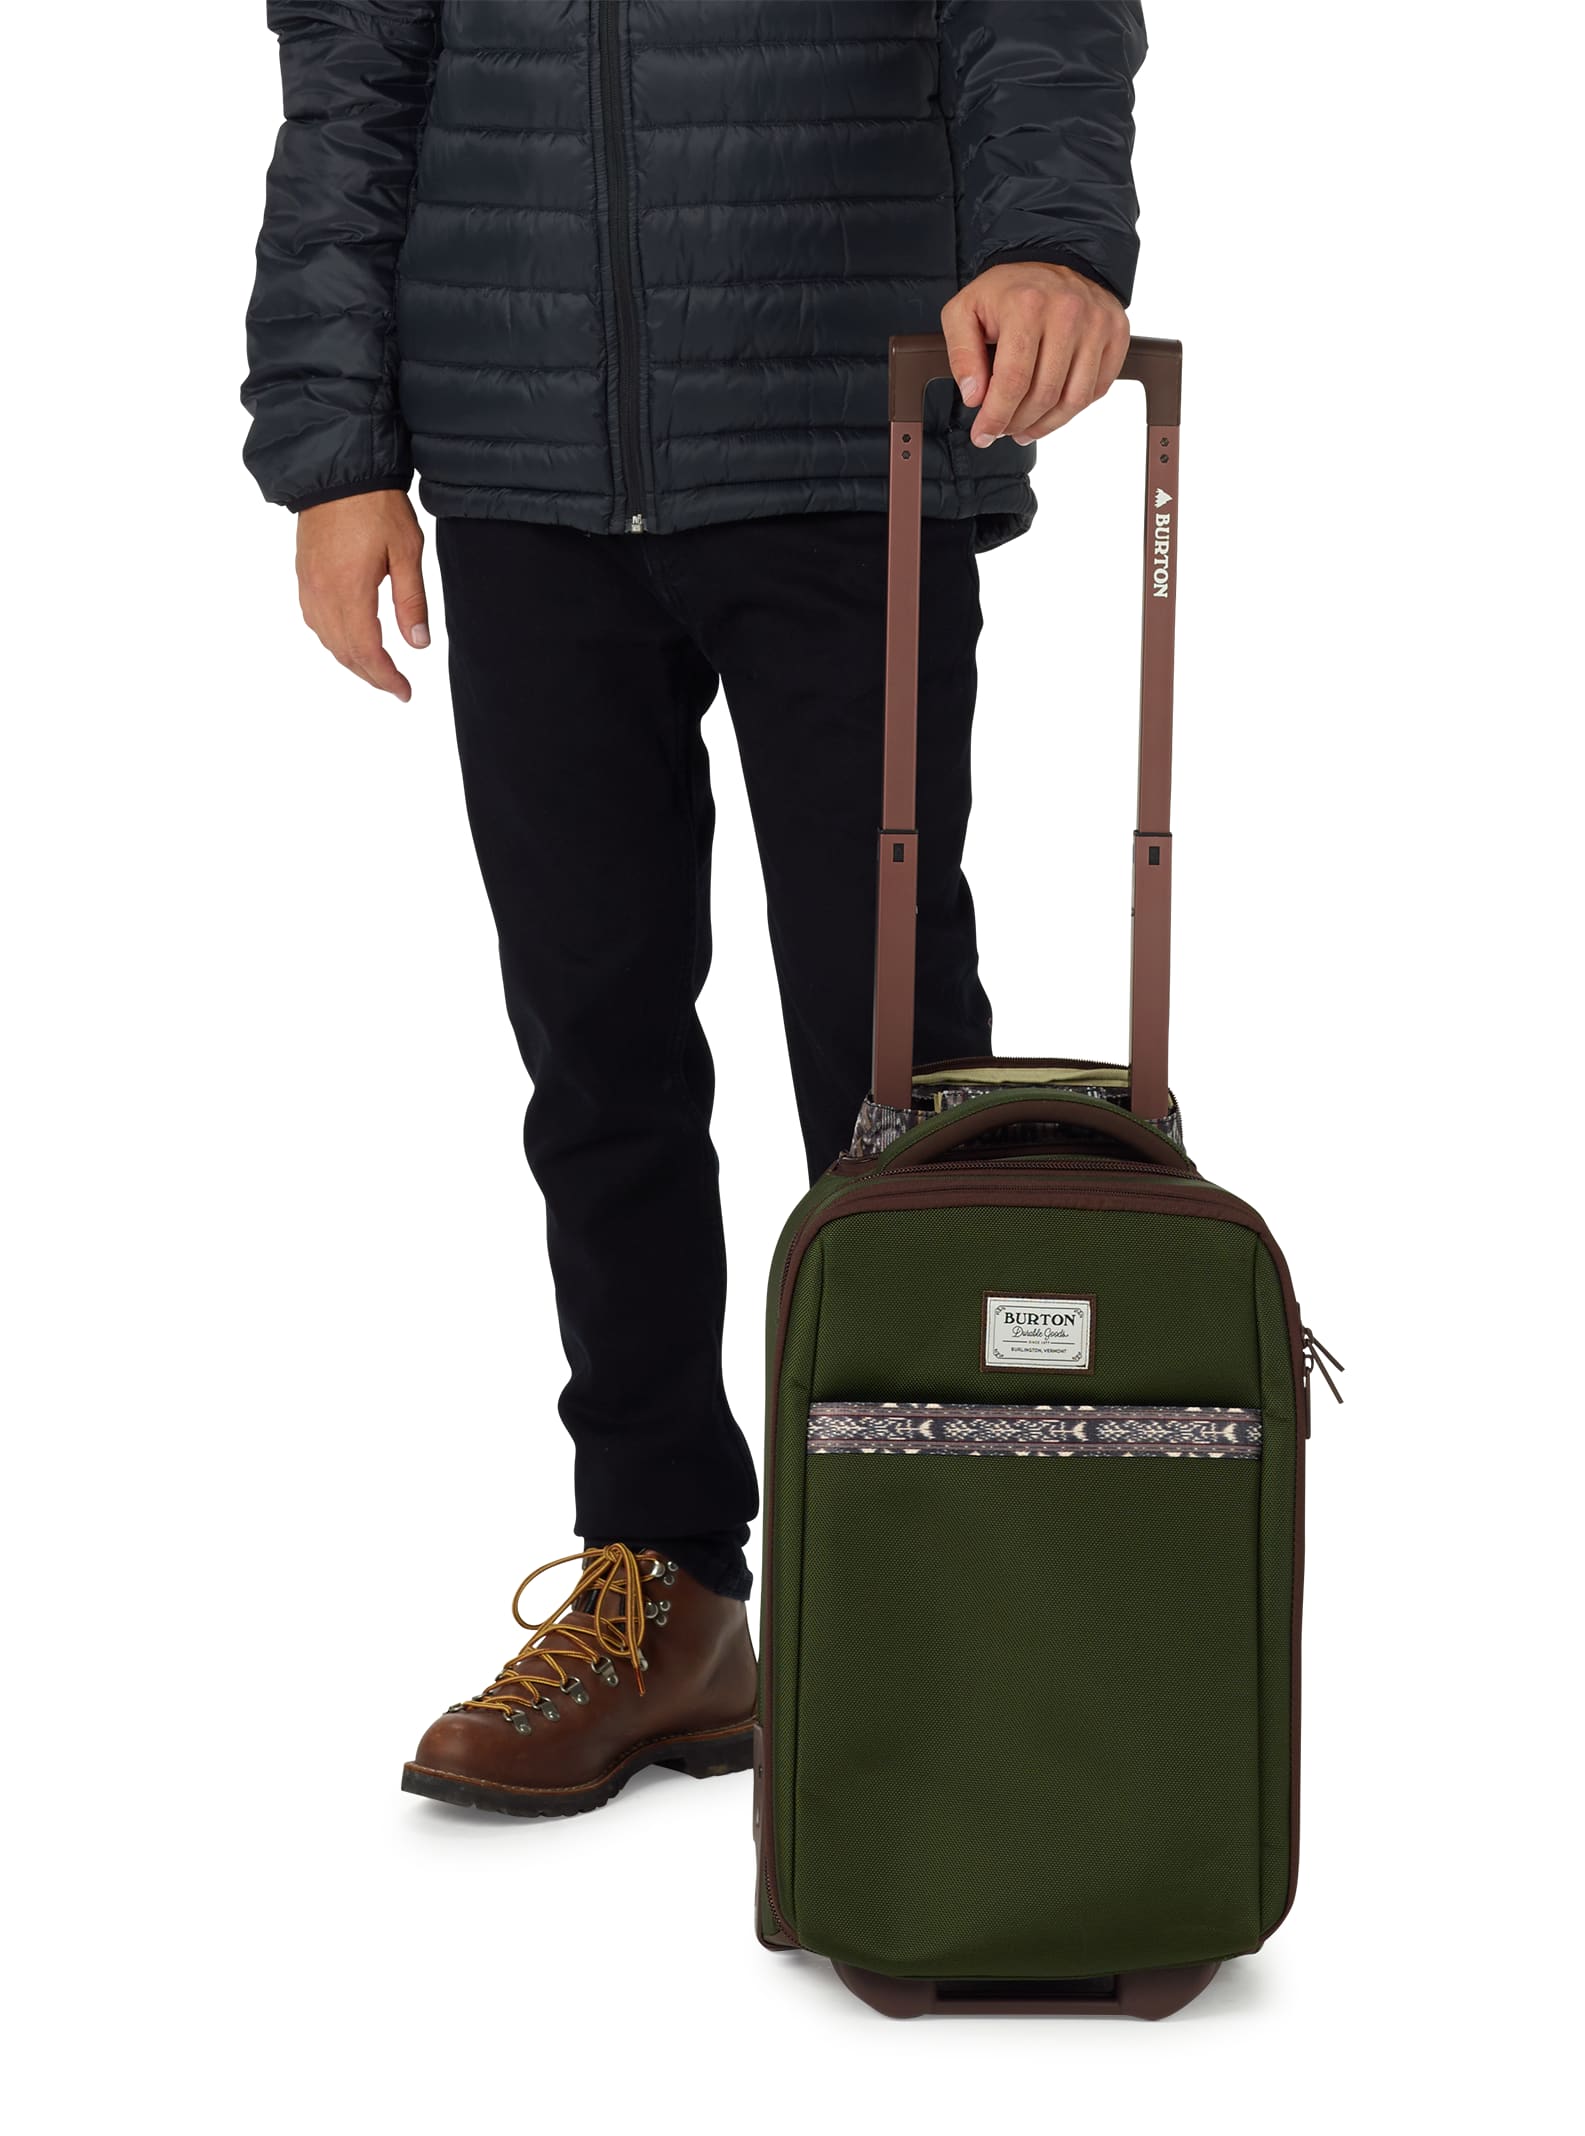 Burton Wheelie Flyer Travel Bag | Burton Snowboards Spring 2017 GR